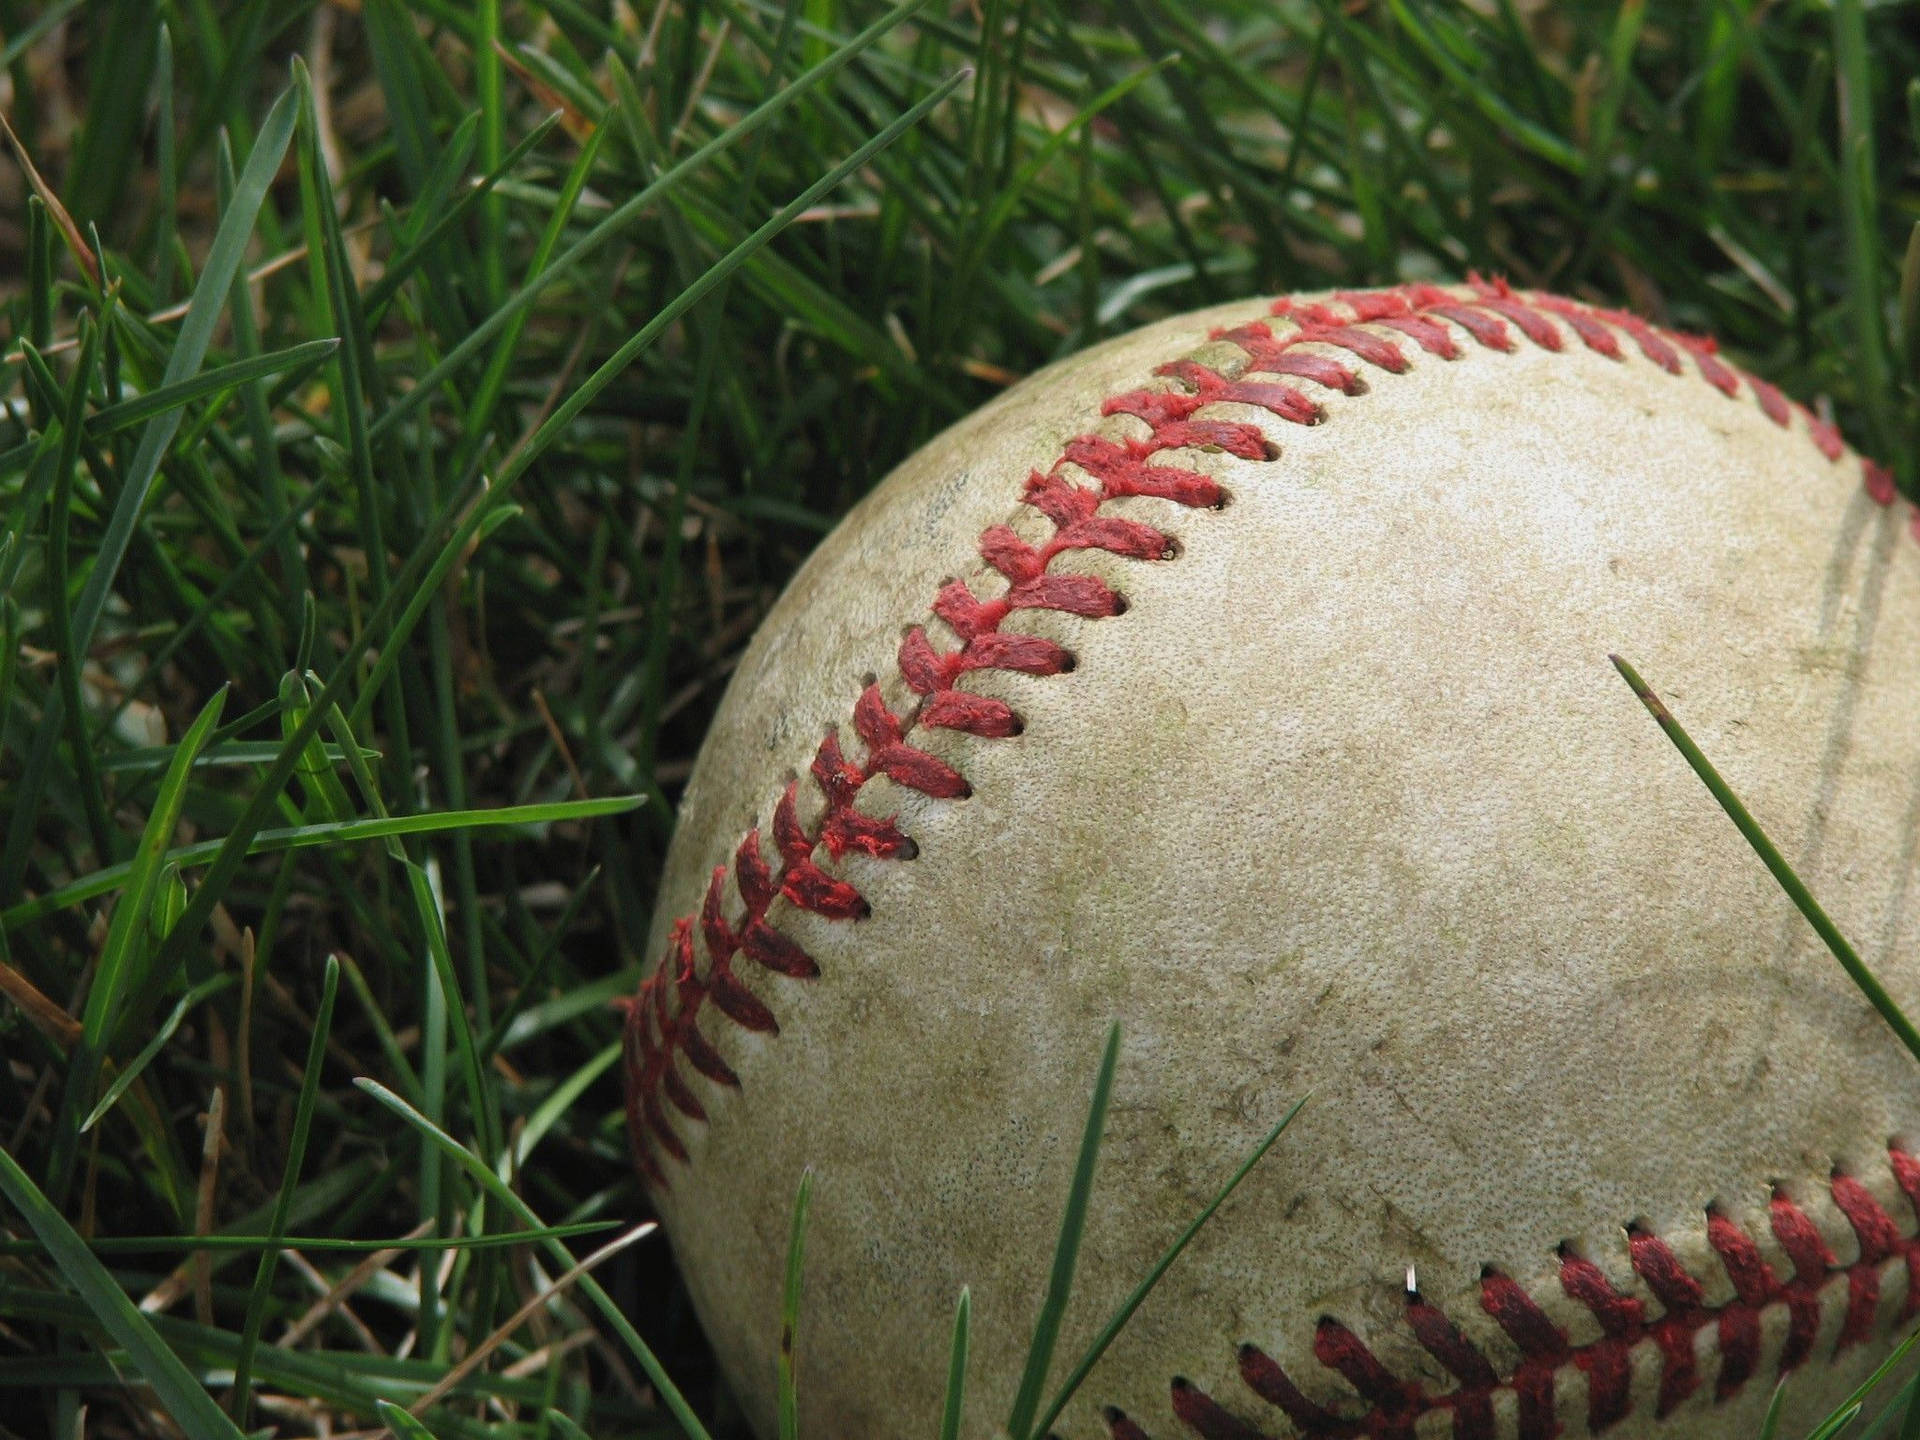 Used Dirty Baseball On Grass